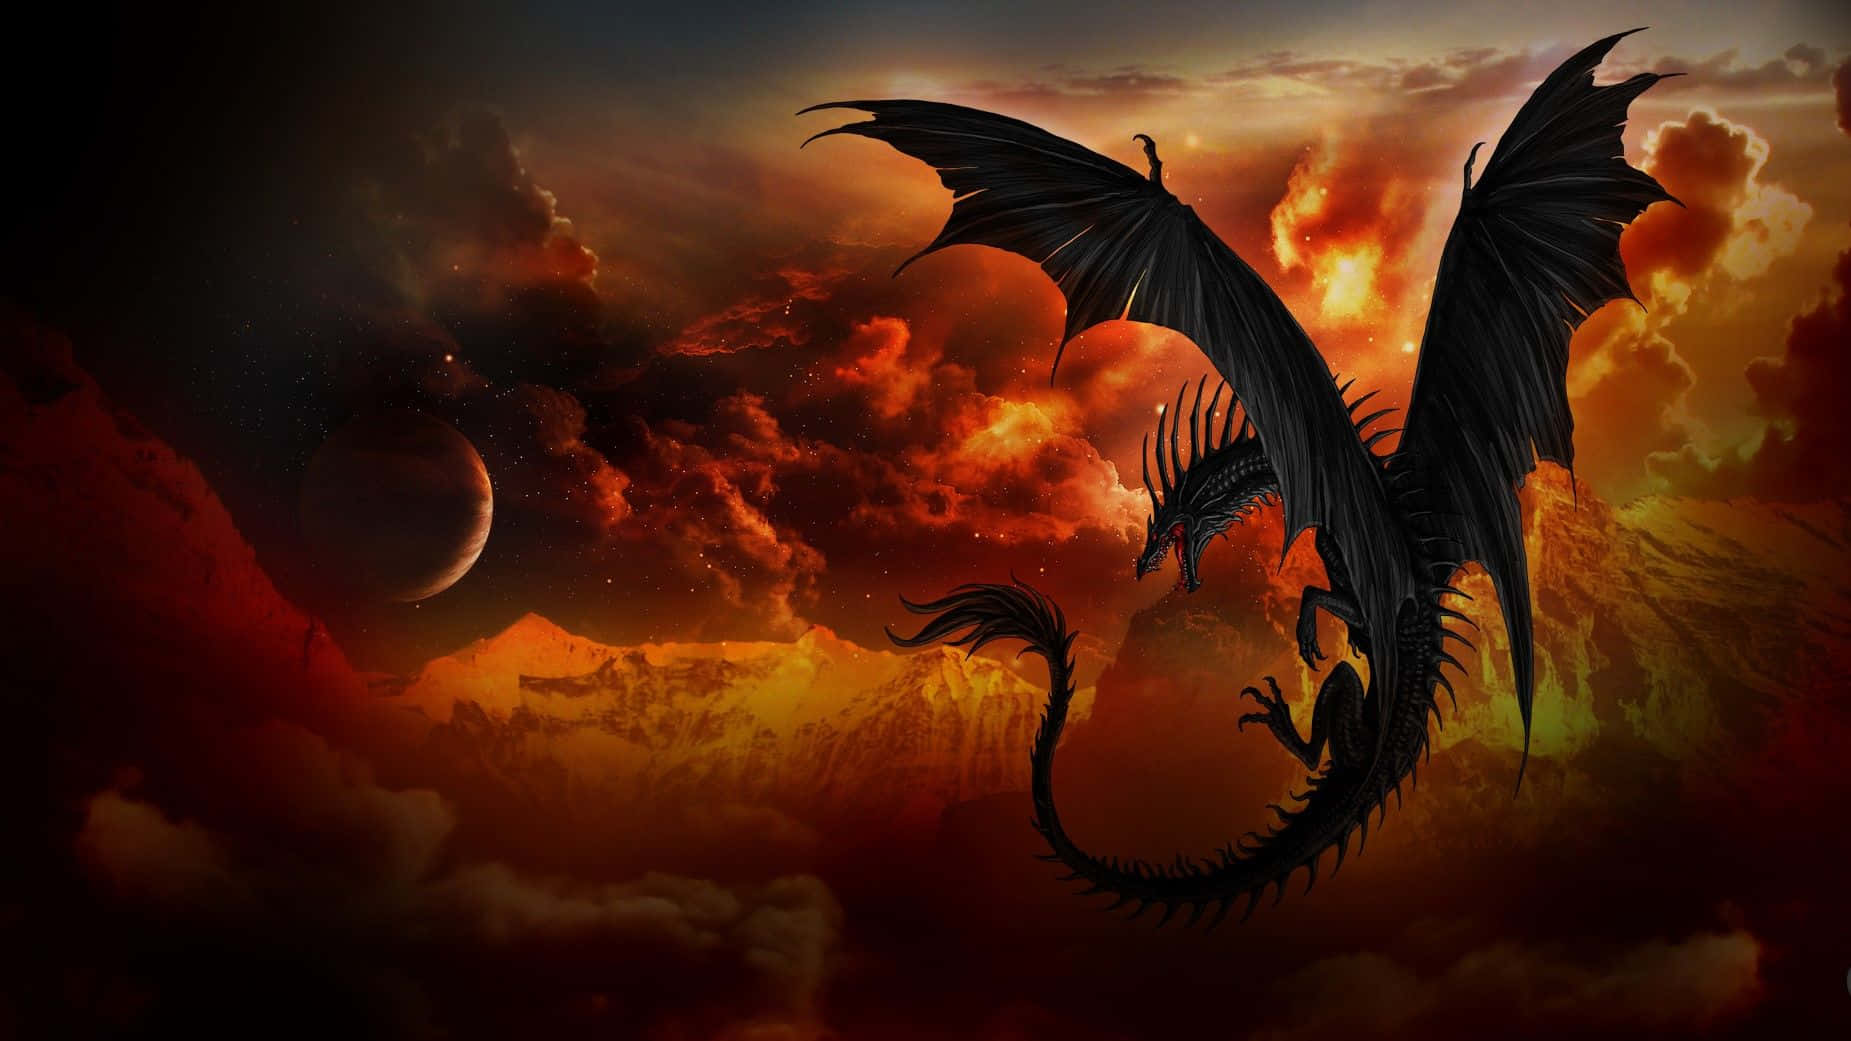 1080p Dragon Fantasy Video Game Wallpaper